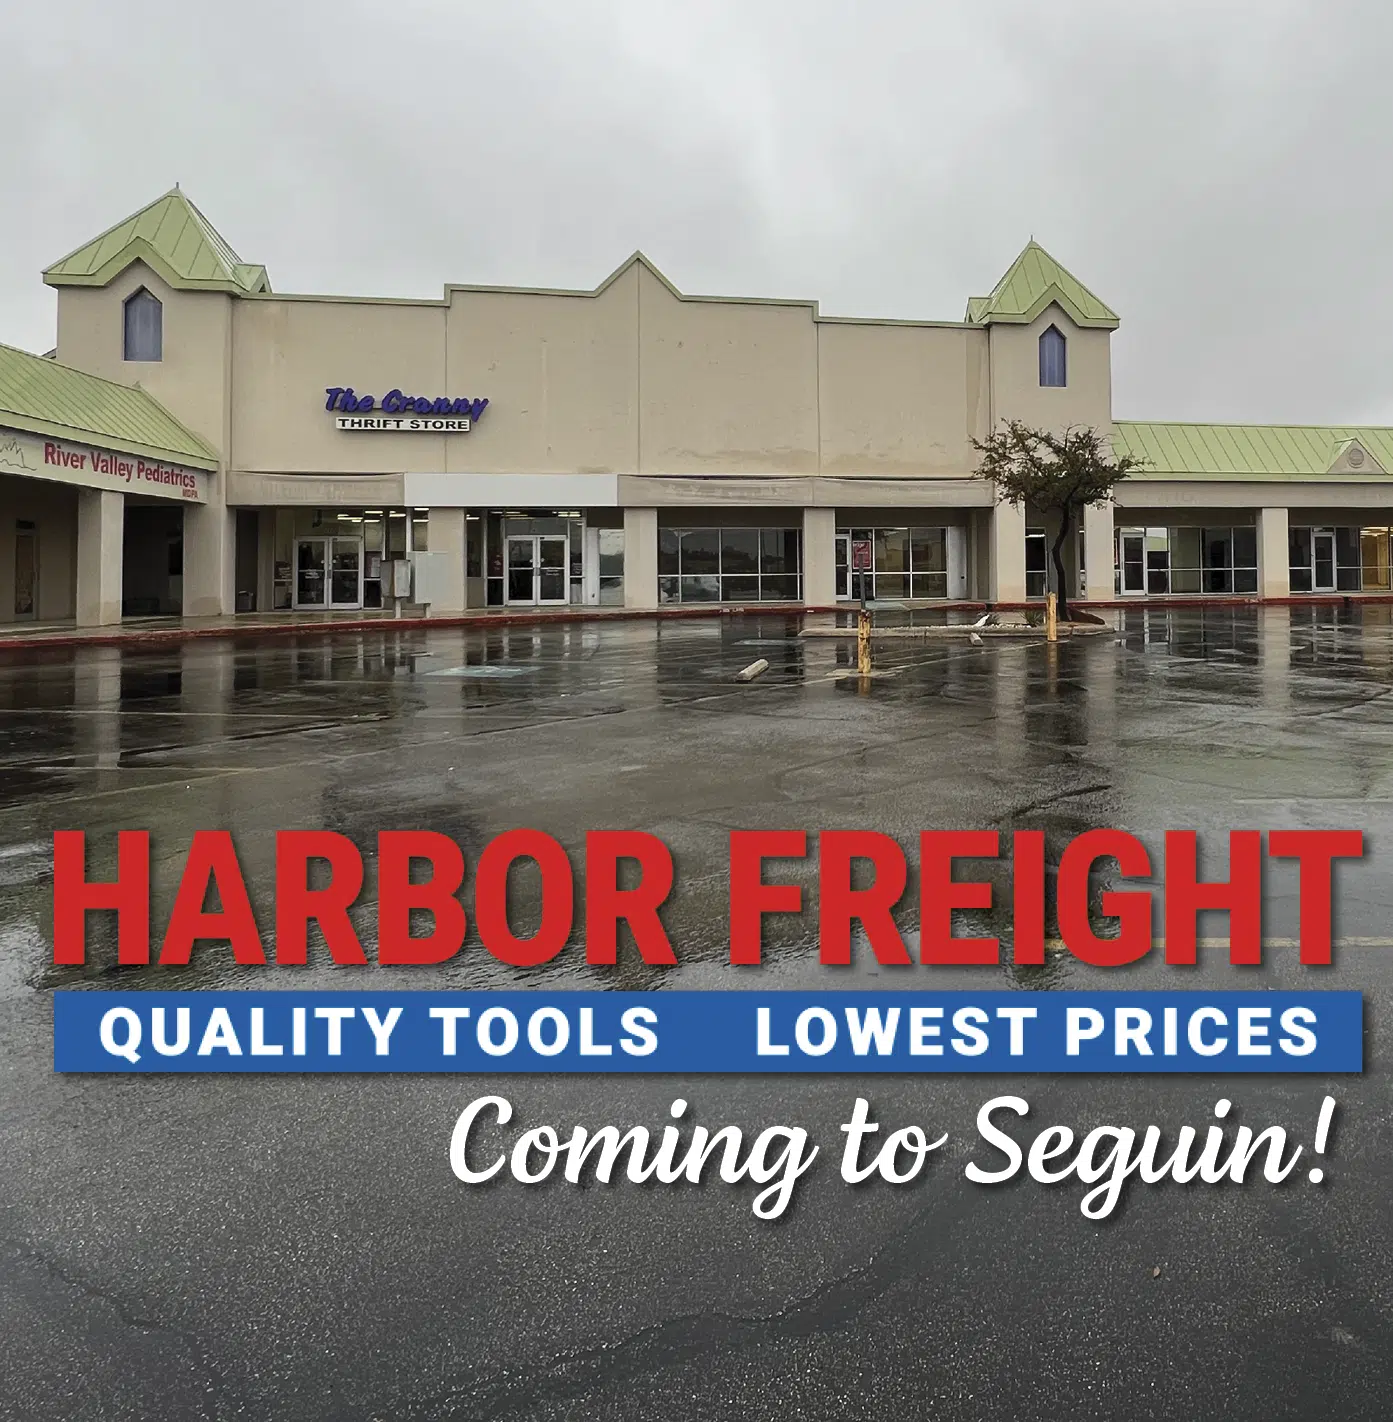 National retailer announces new location in Seguin